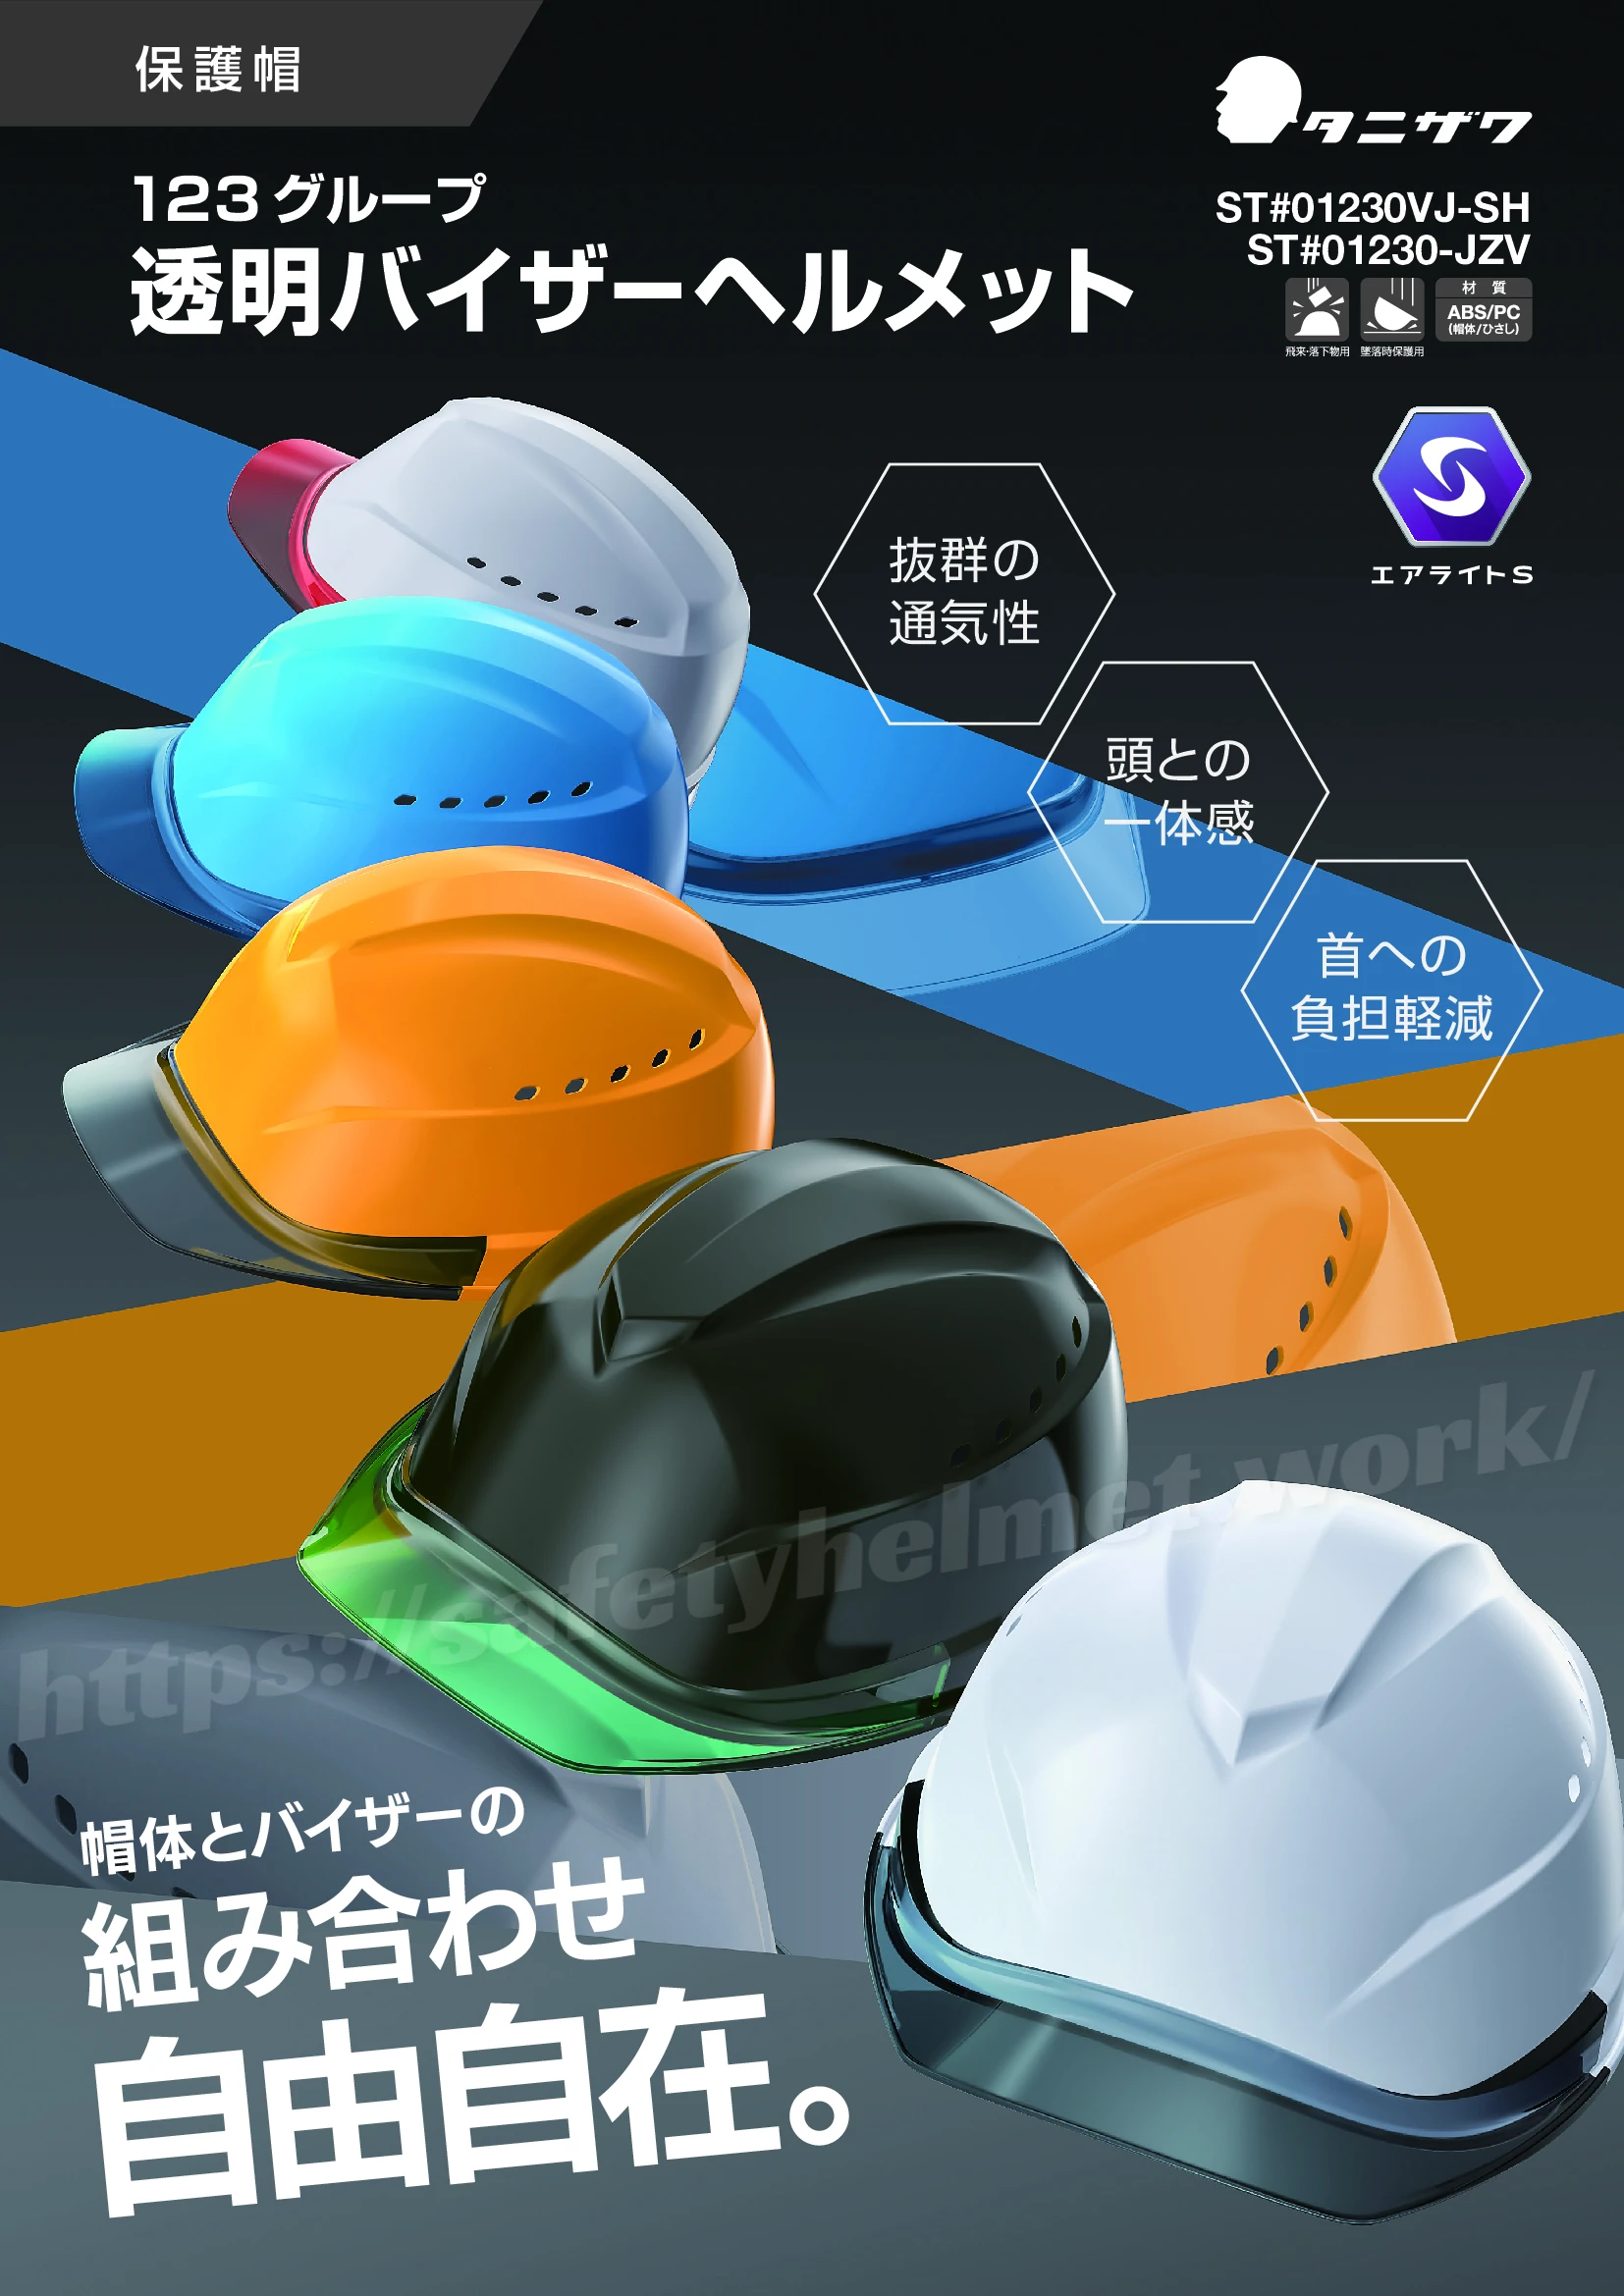 tanizawa-helmet-airlight-st-01230vjsh-catalog-1